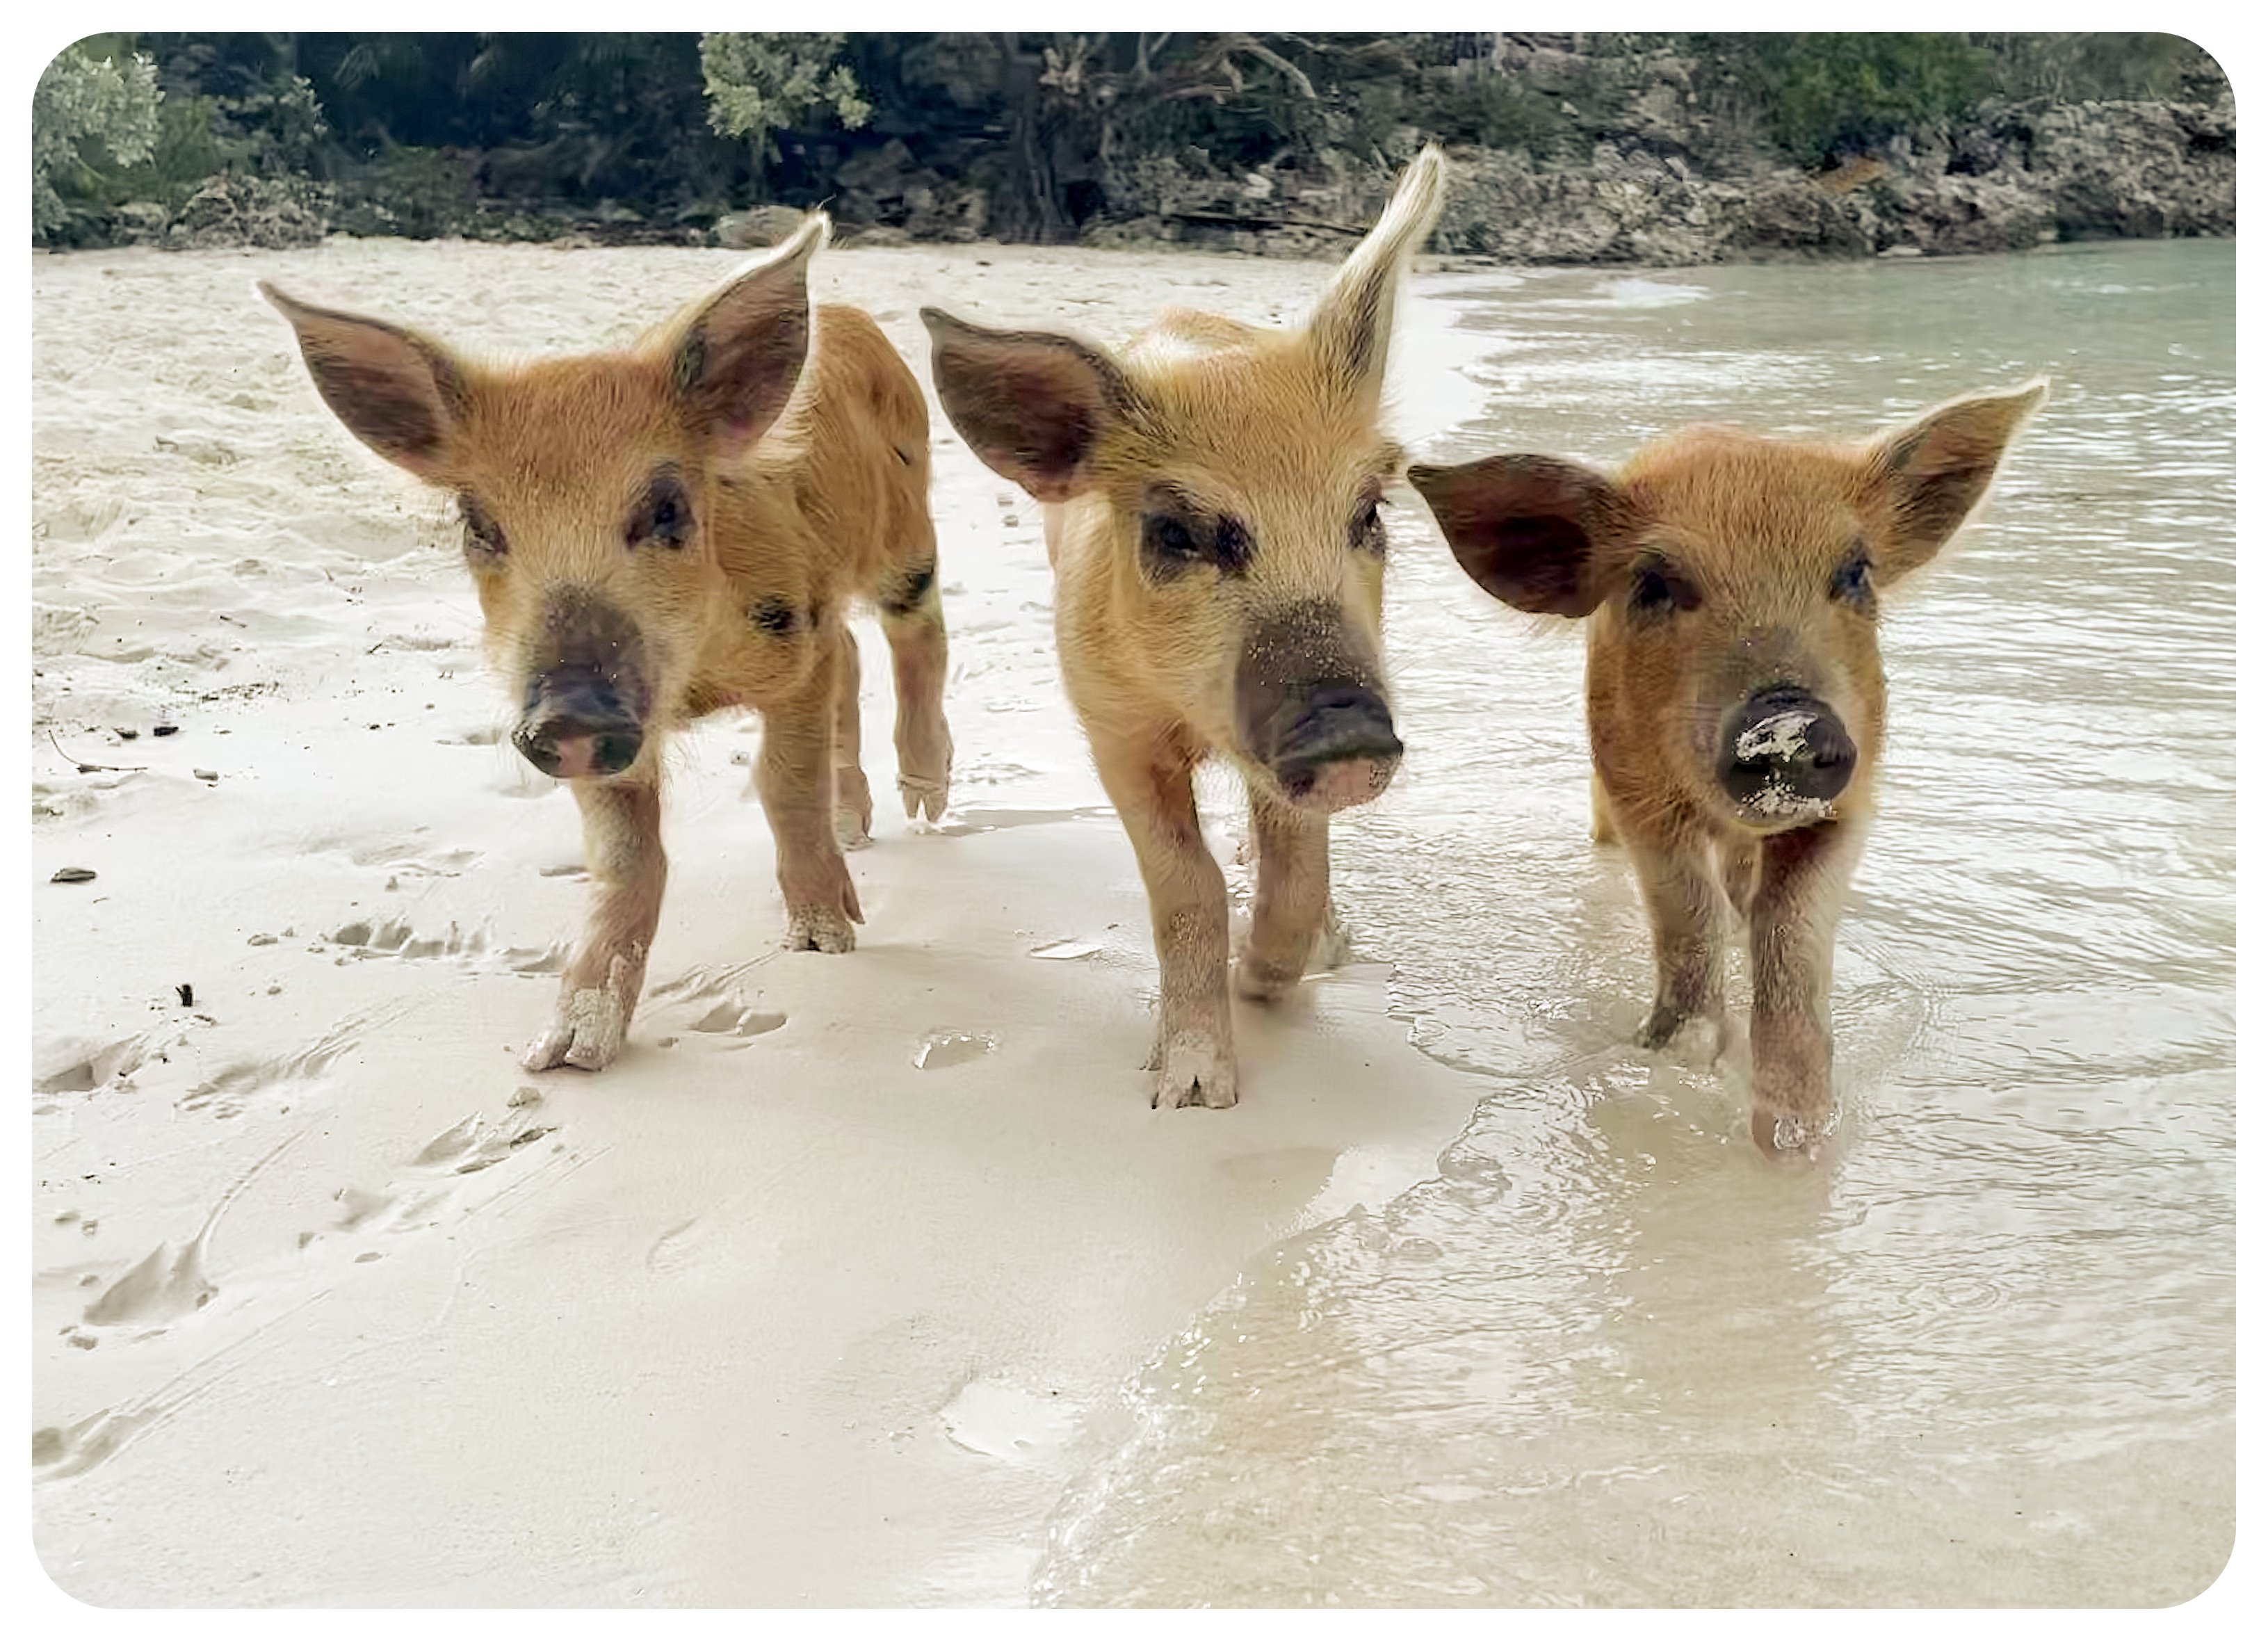 piglets bahamas pig beach1